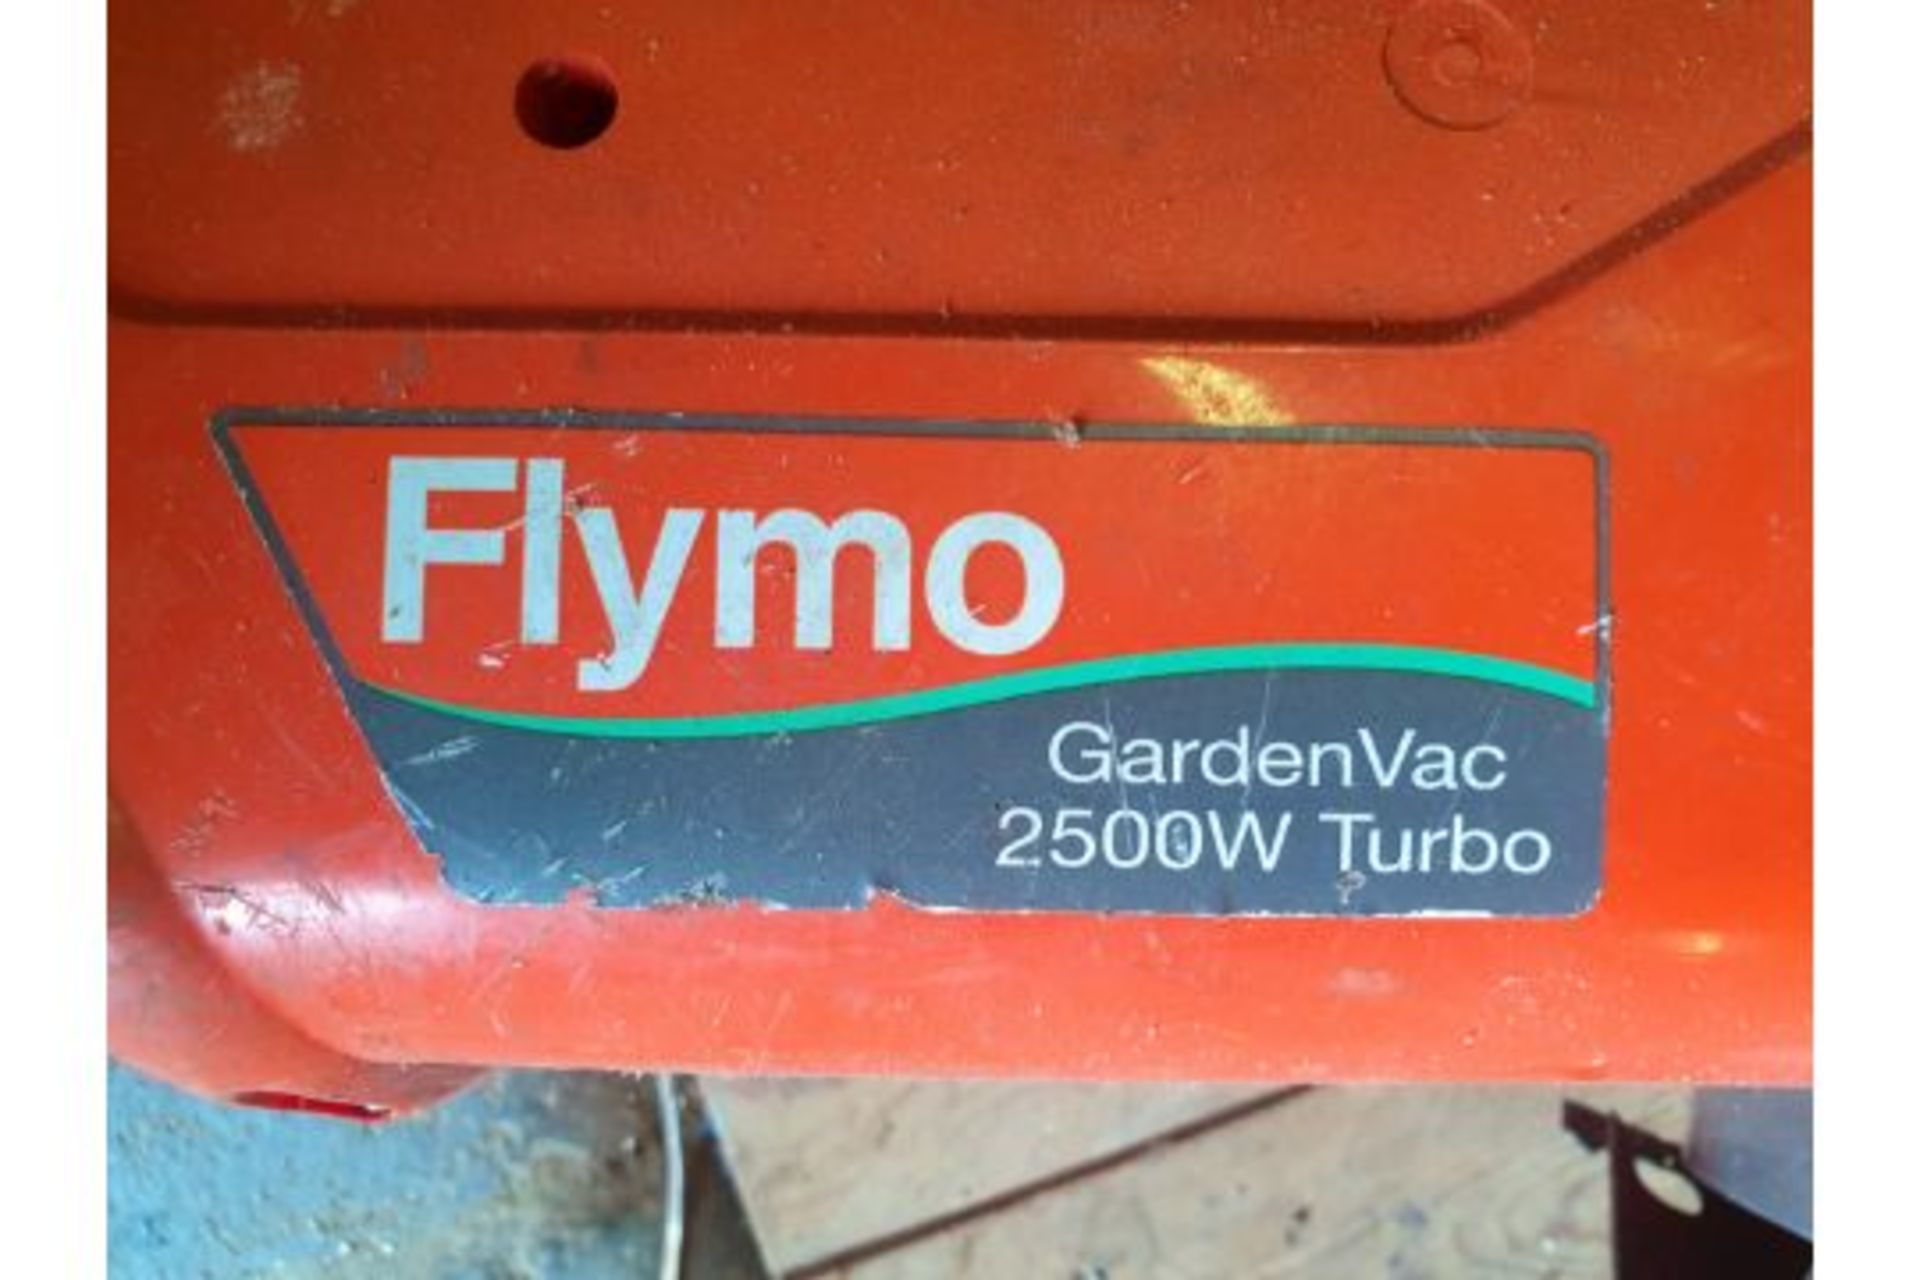 Flymow Gardenvac 2500WTurbo - Image 3 of 4